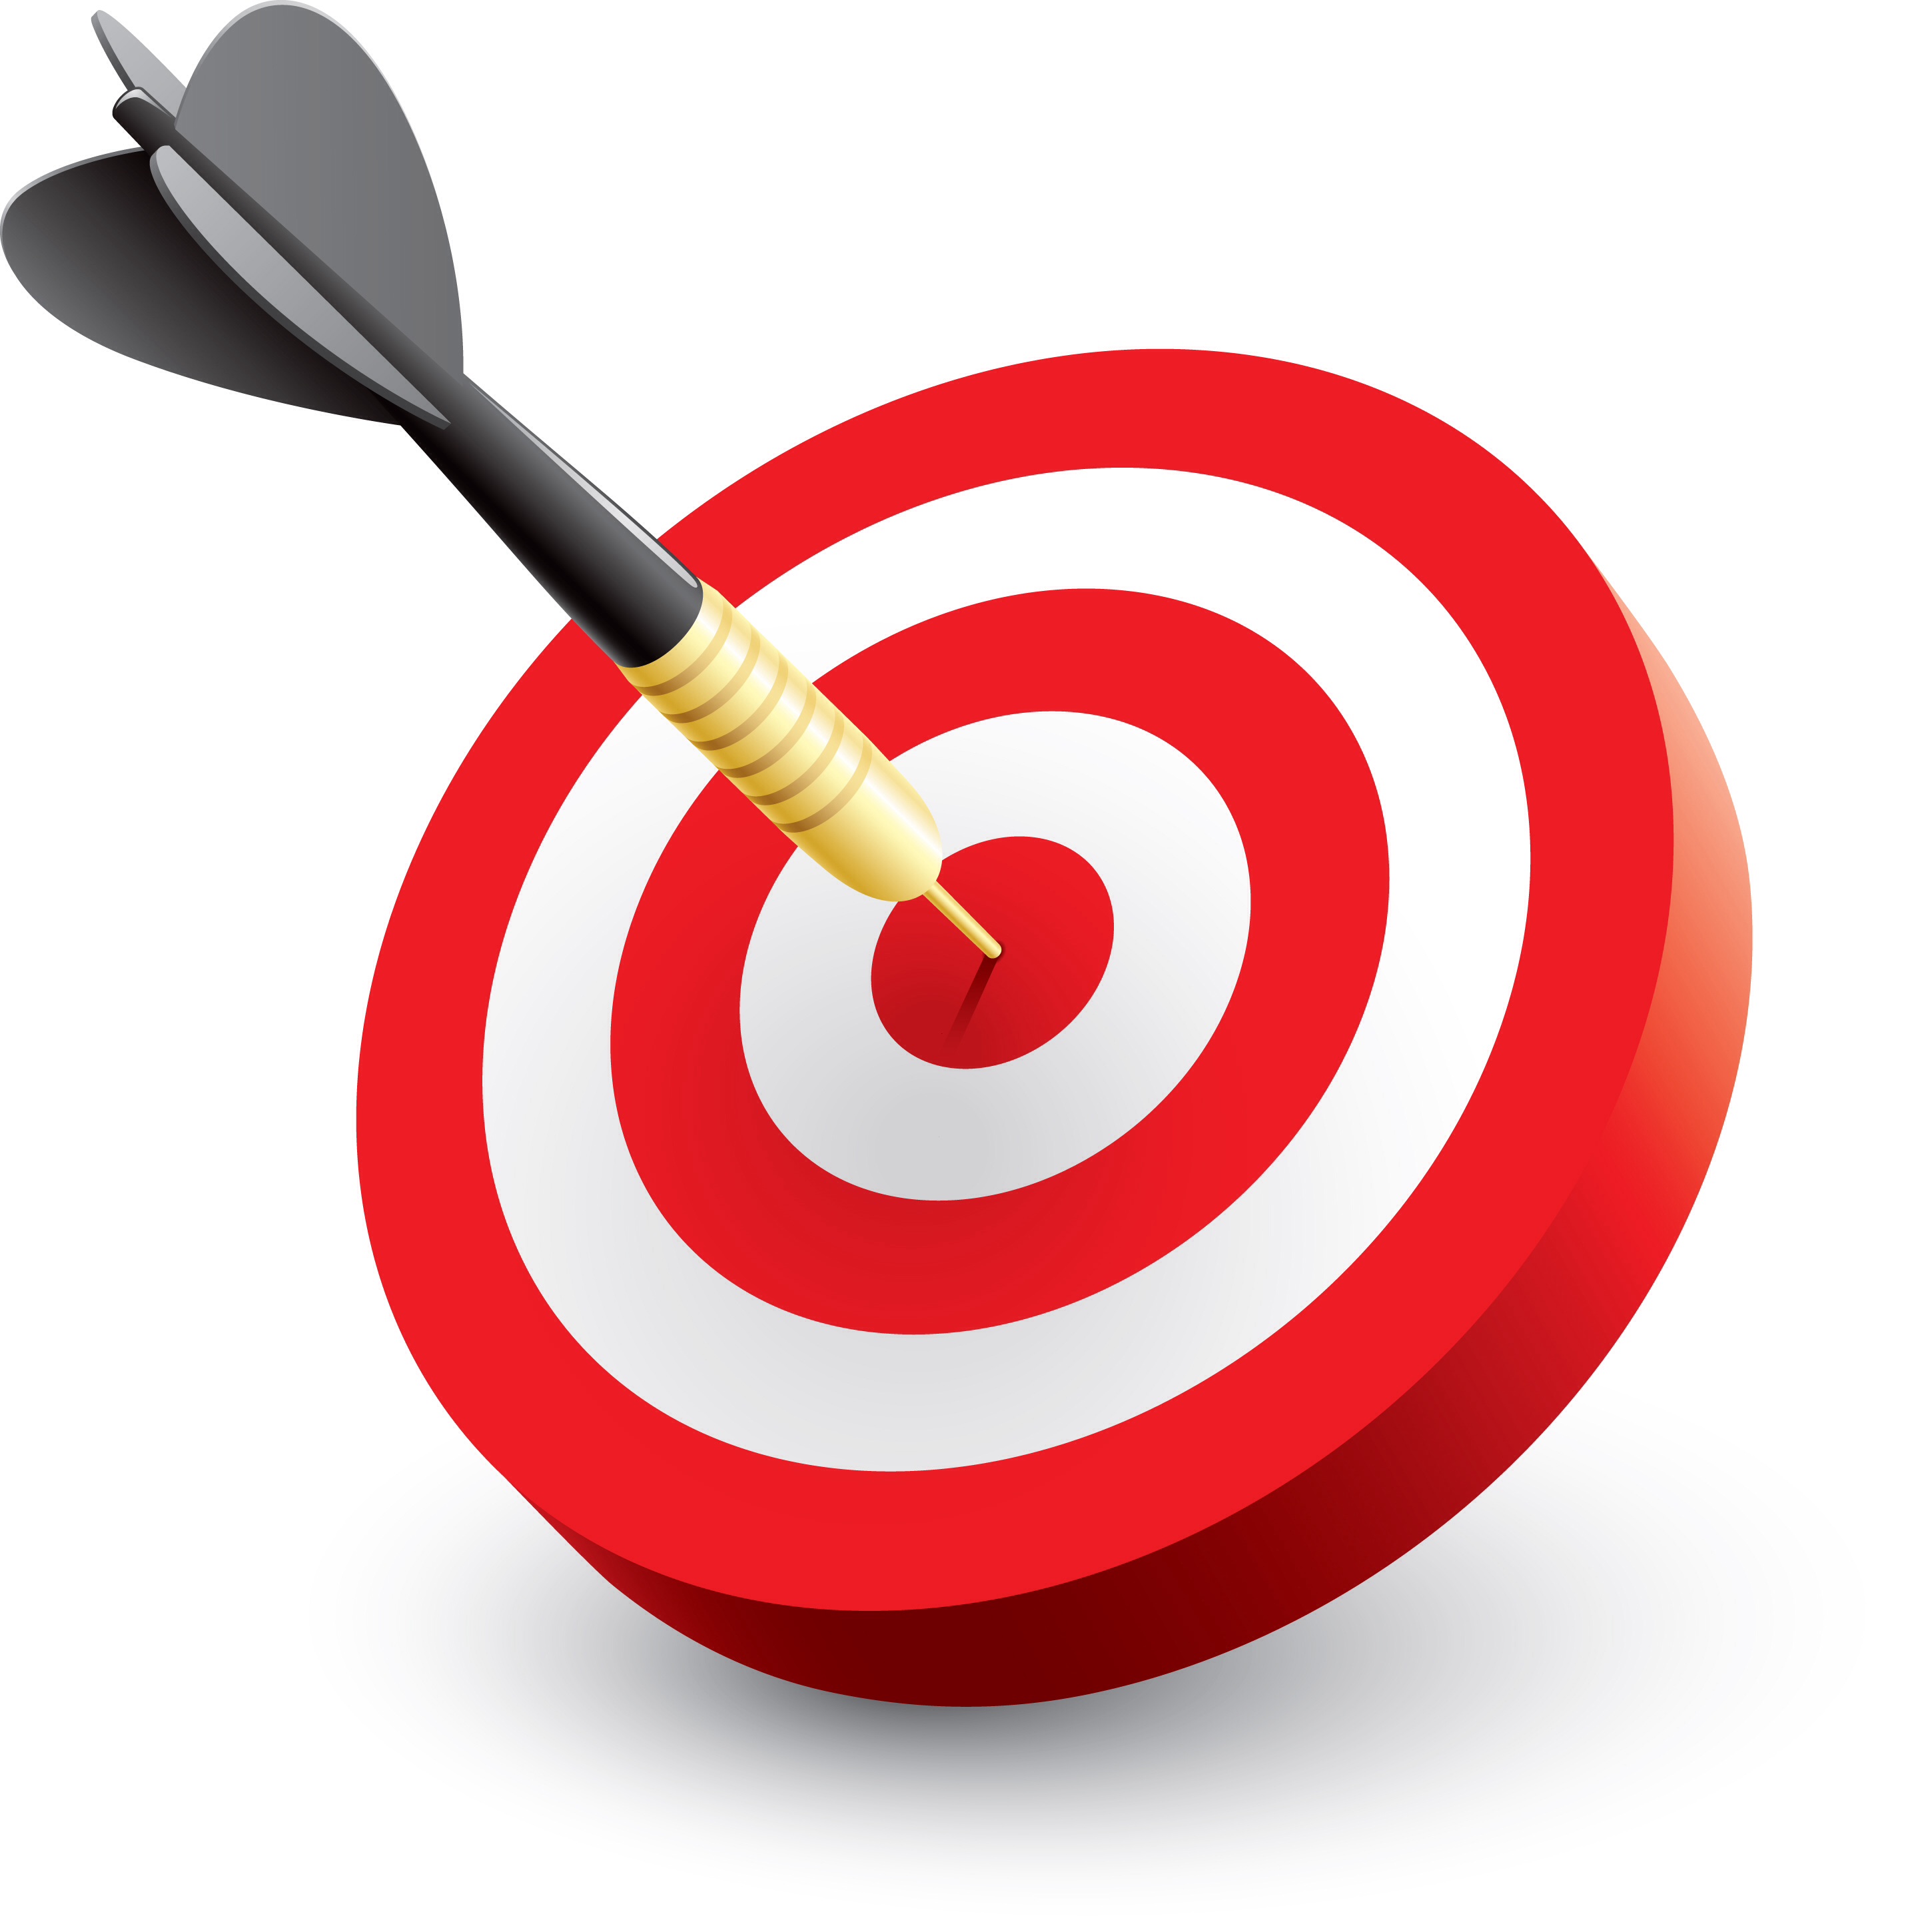 Bullseye photos of goals and objectives clip art clip art image